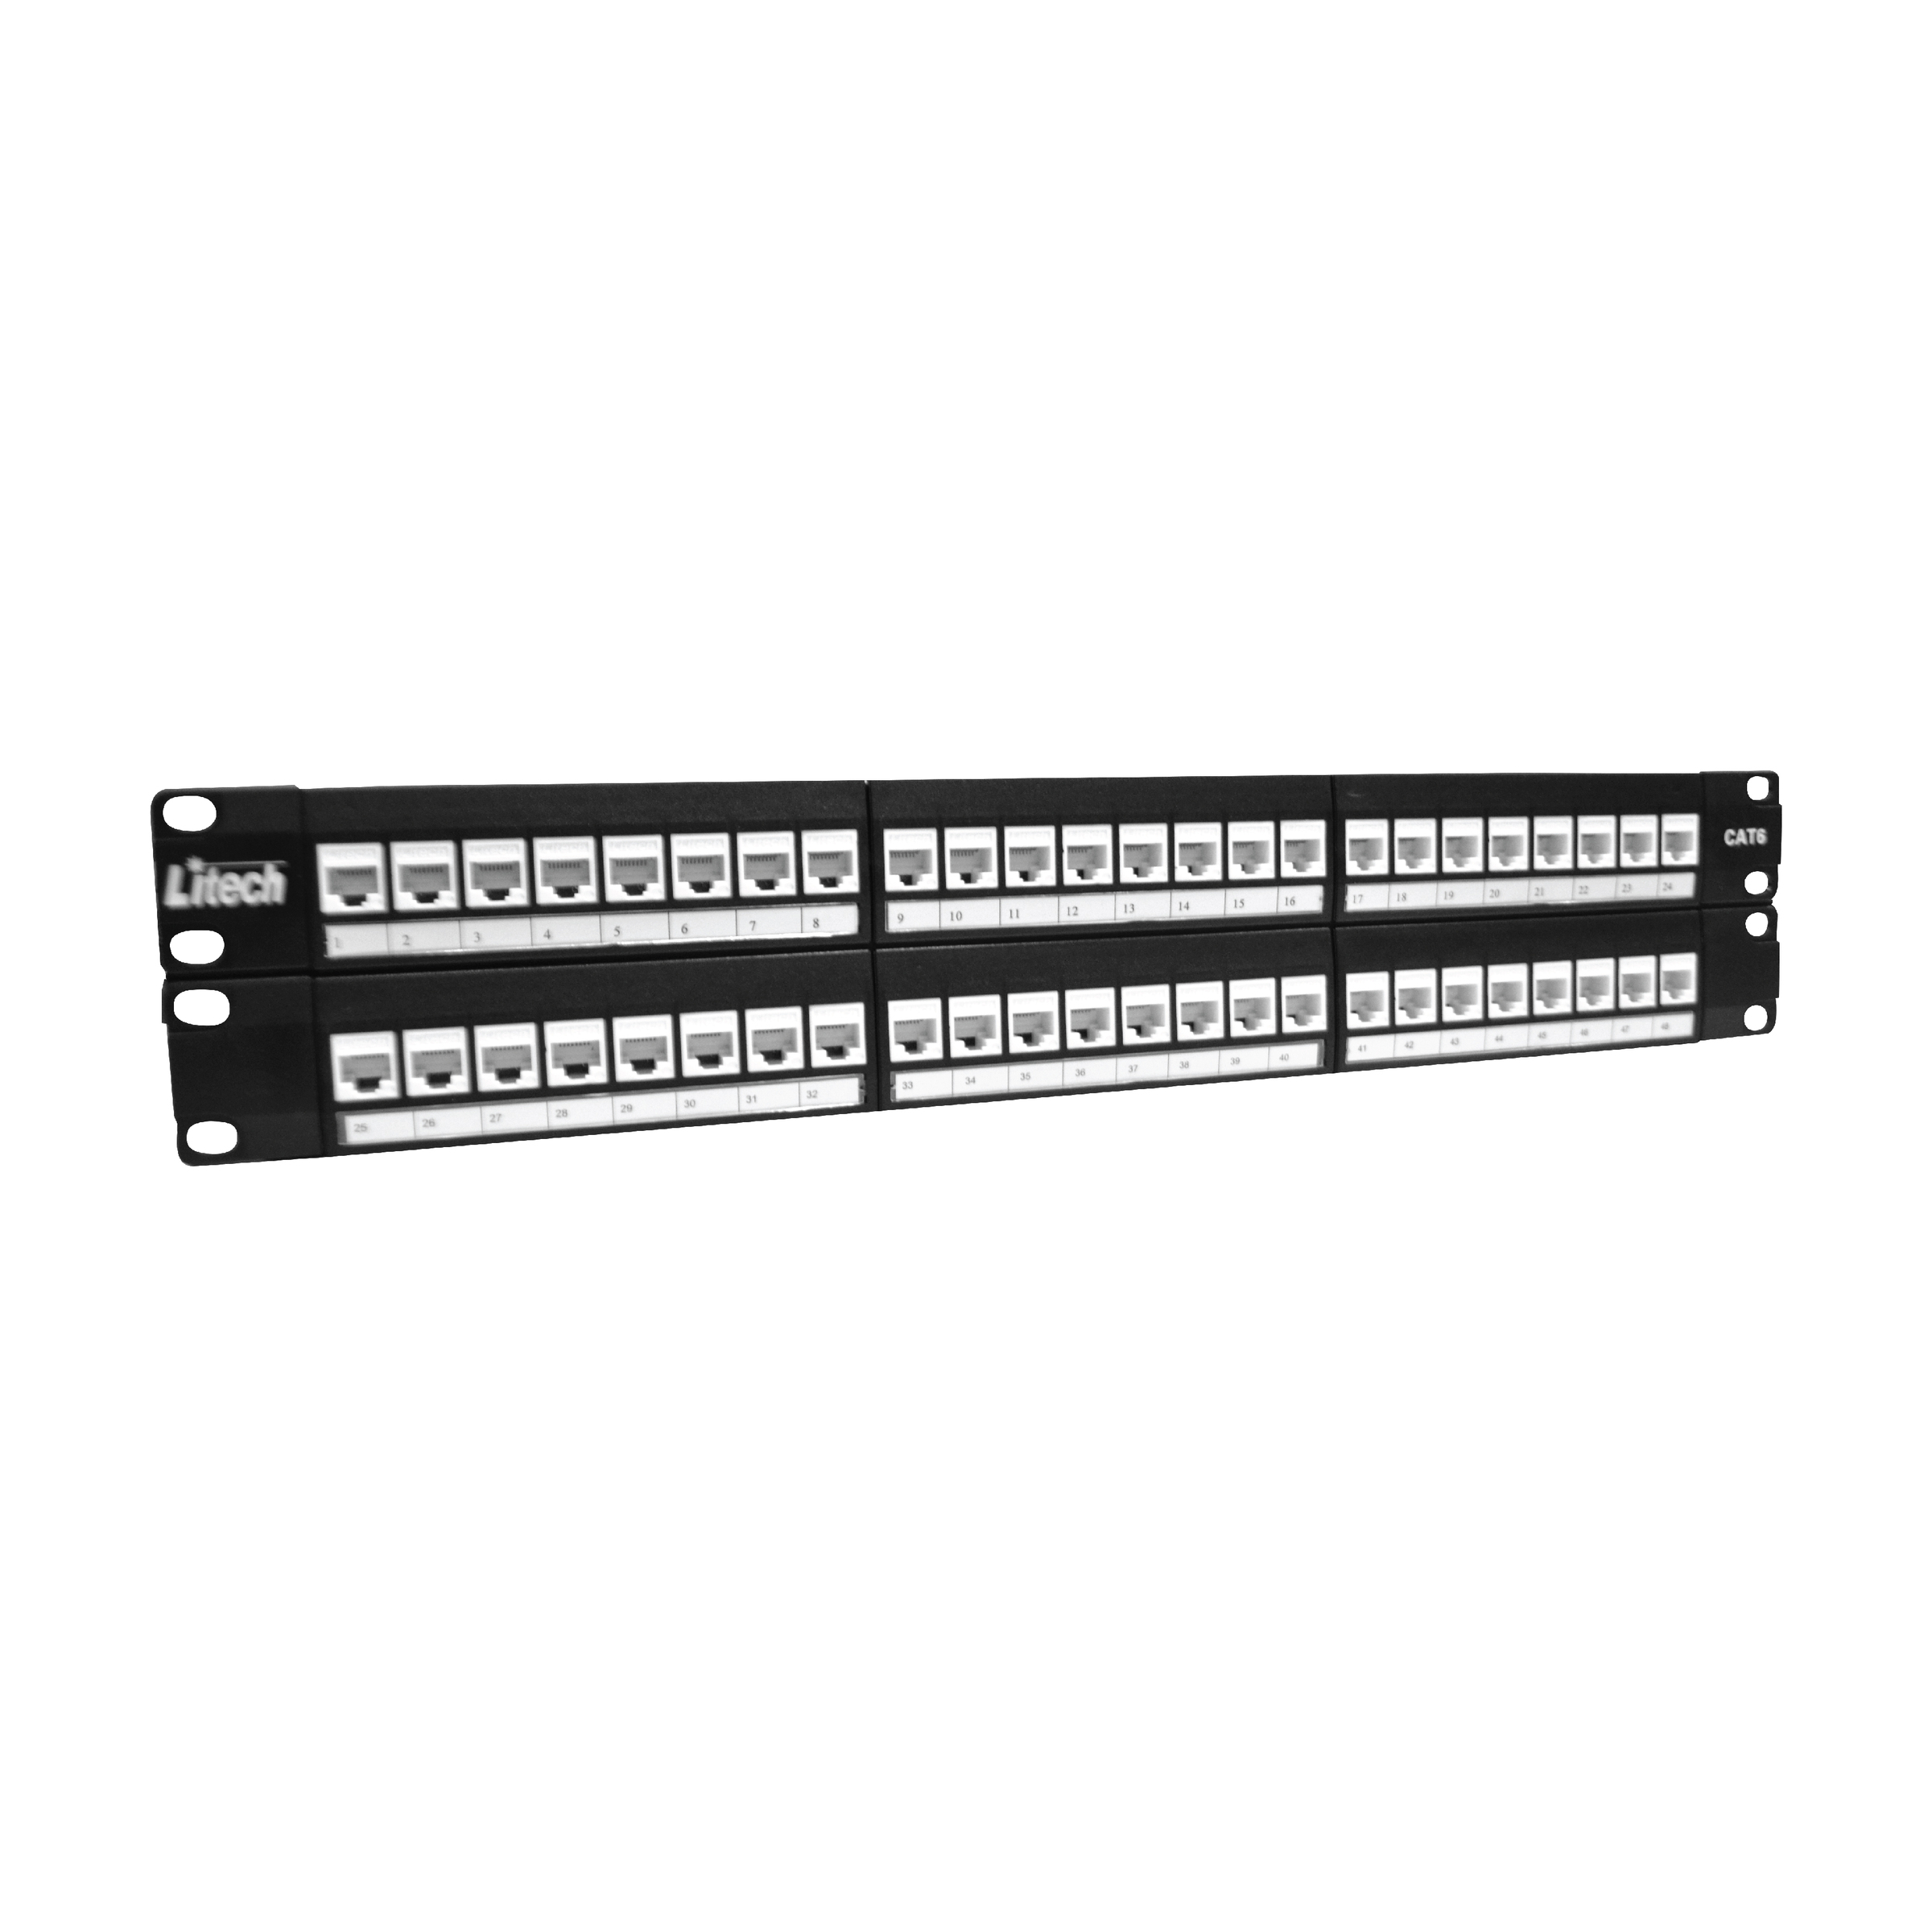 Structured Cabling_panel_Cat6 48P_B .jpg